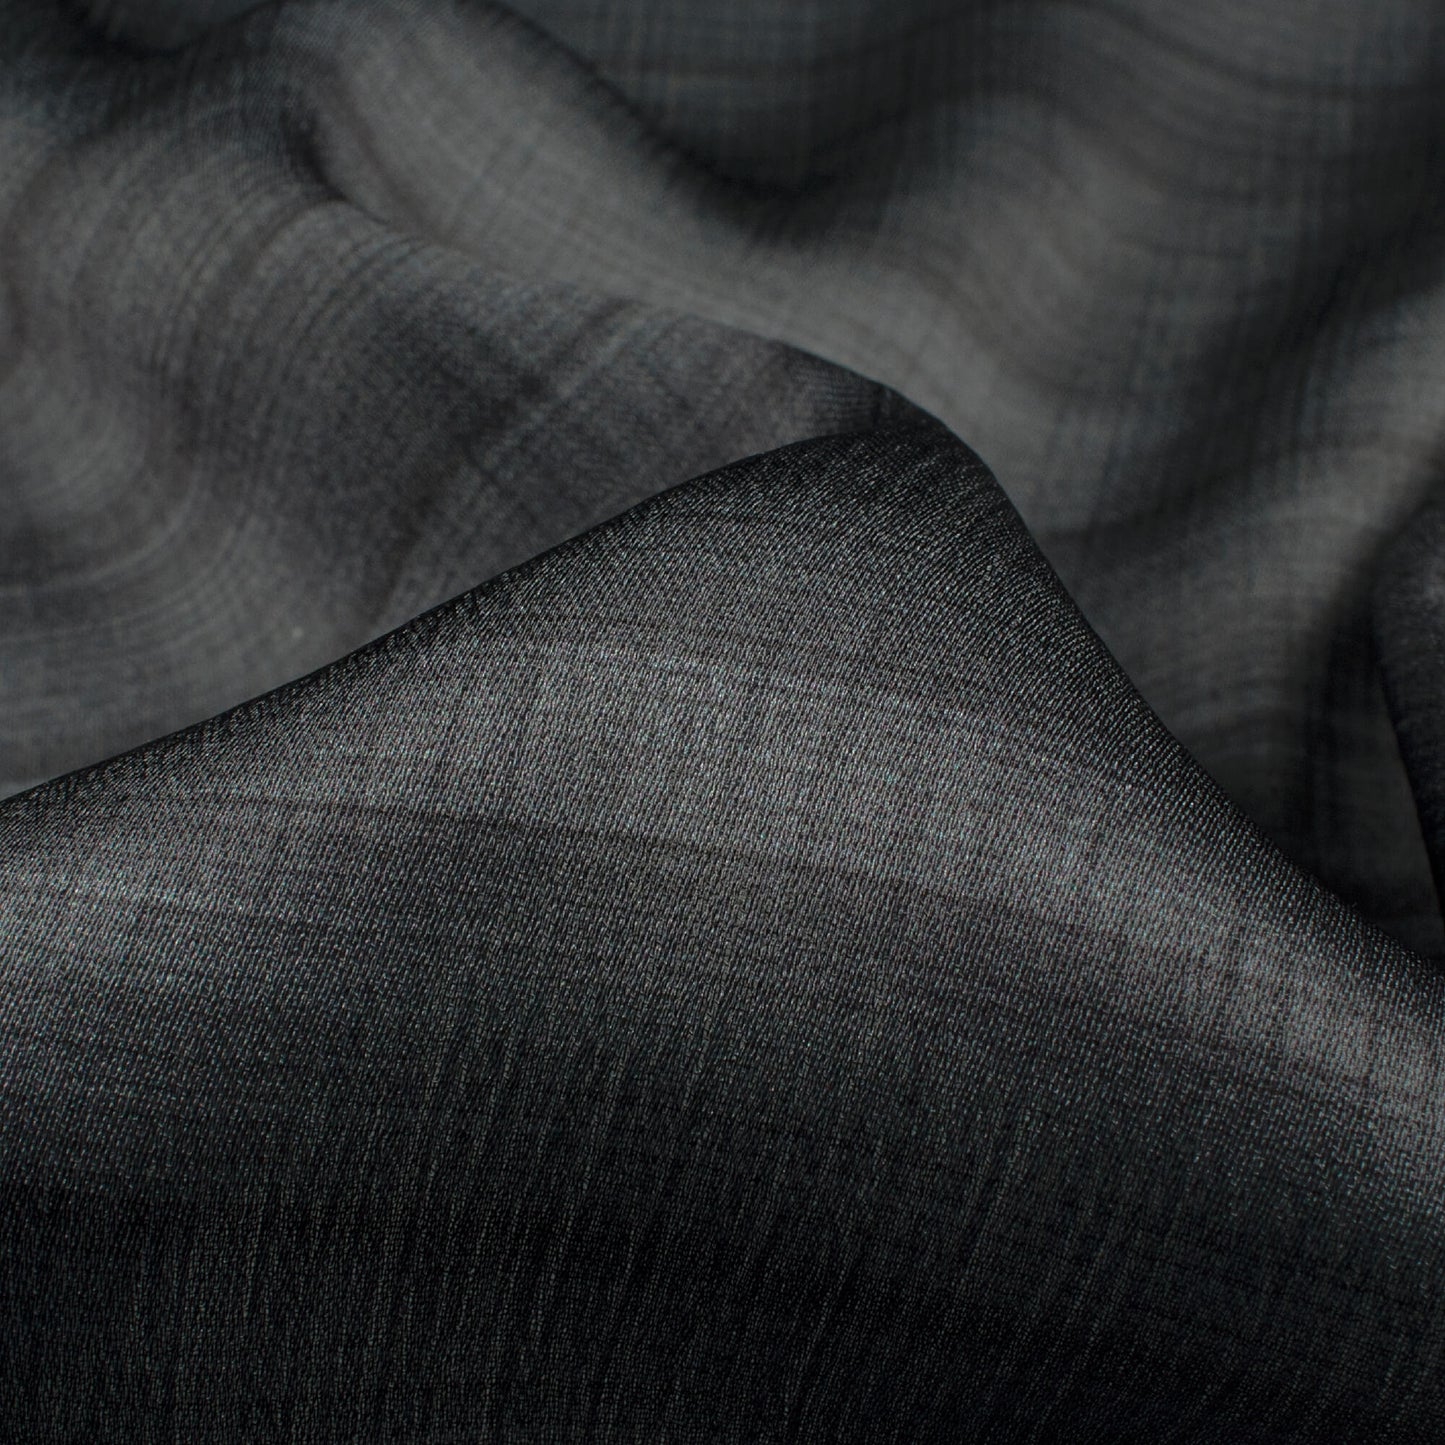 Charcoal Grey Texture Pattern Digital Print Chiffon Satin Fabric